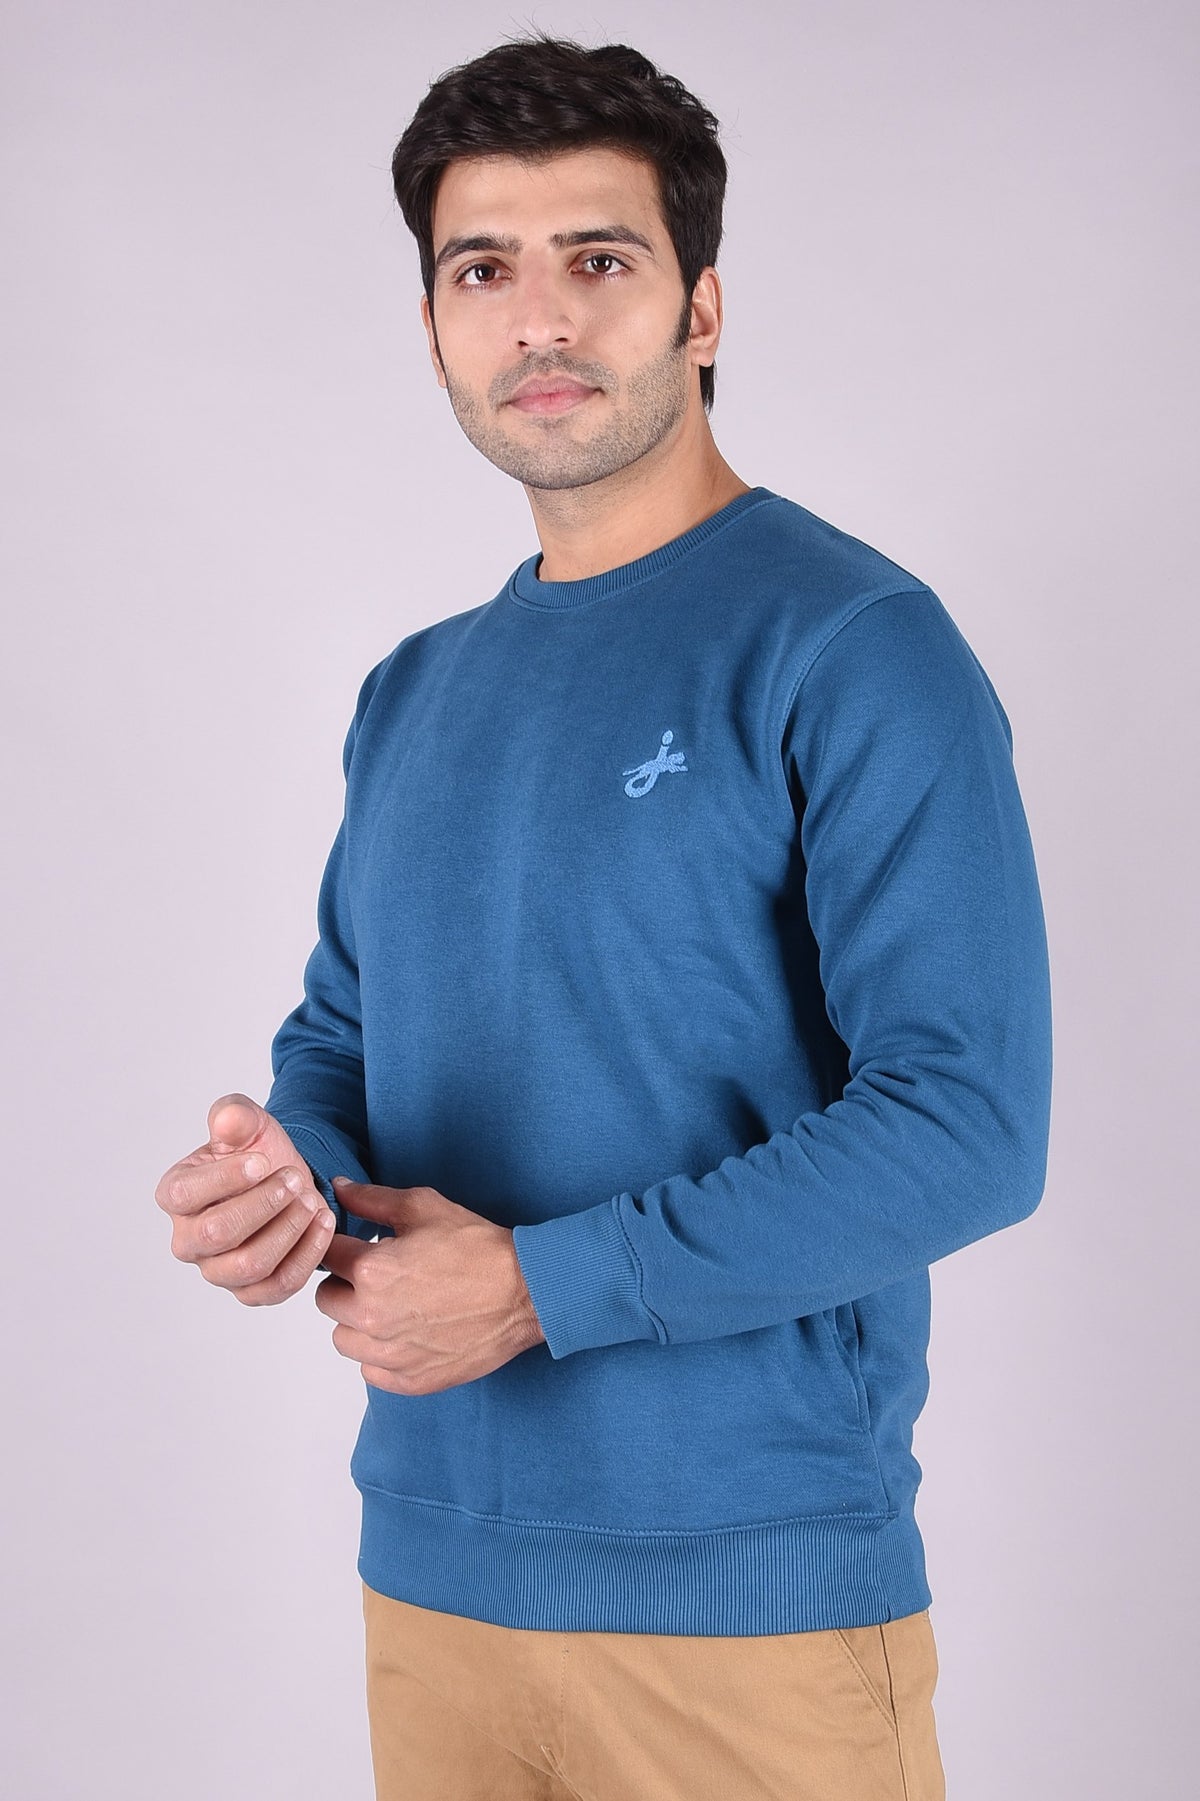 JAGURO Trendy Men's Cotton Teal Blue Sweatshirt